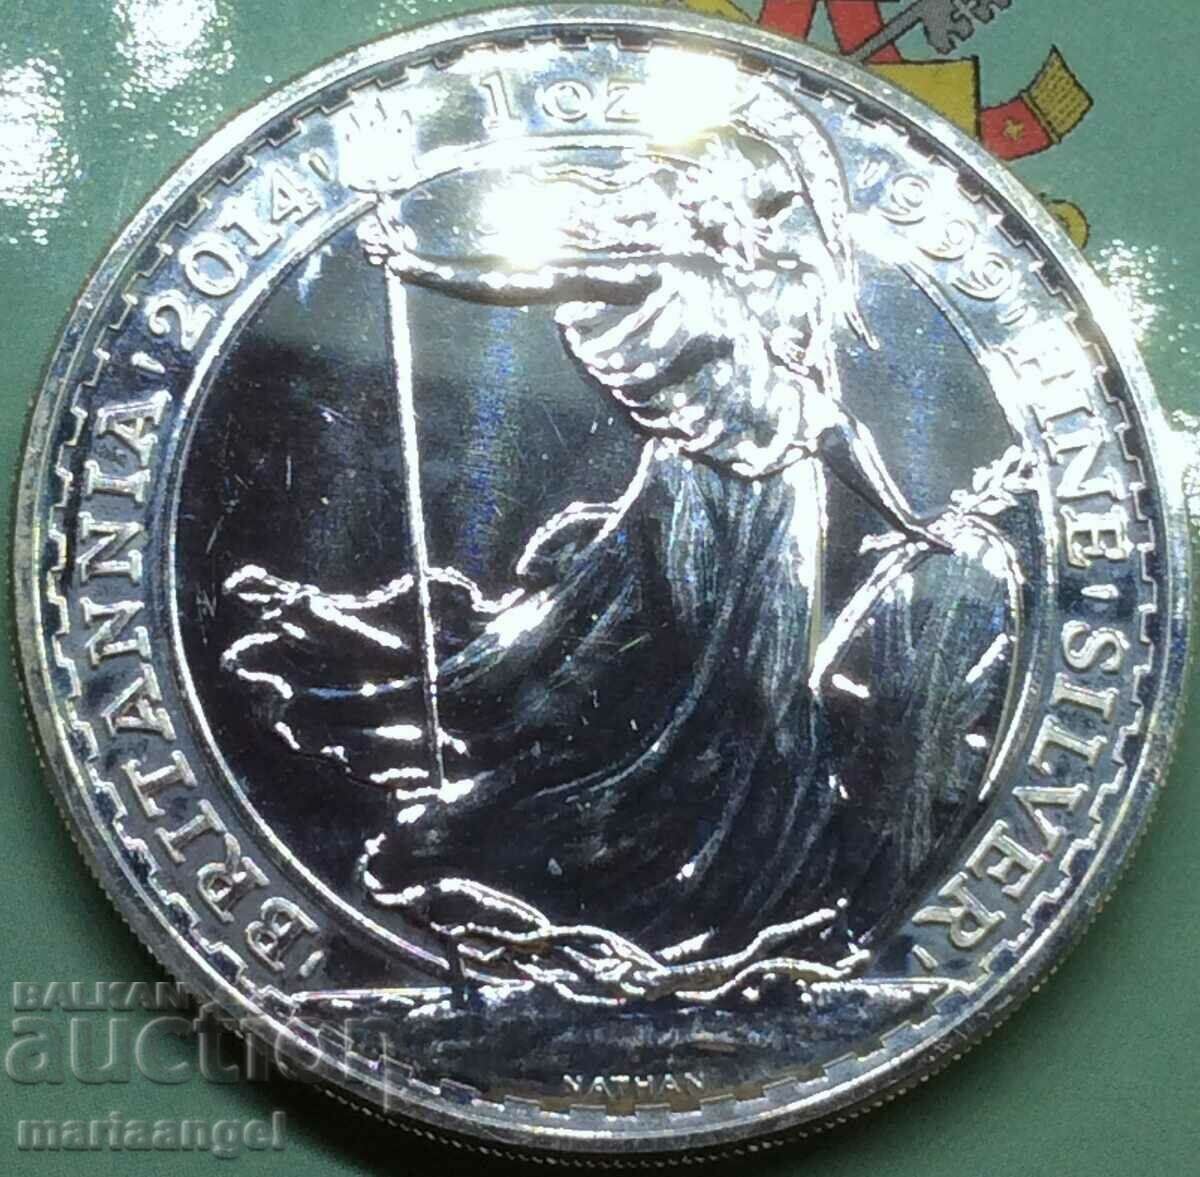 1 Oz Great Britain 2 Pounds 2014 "Britain" UNC Silver